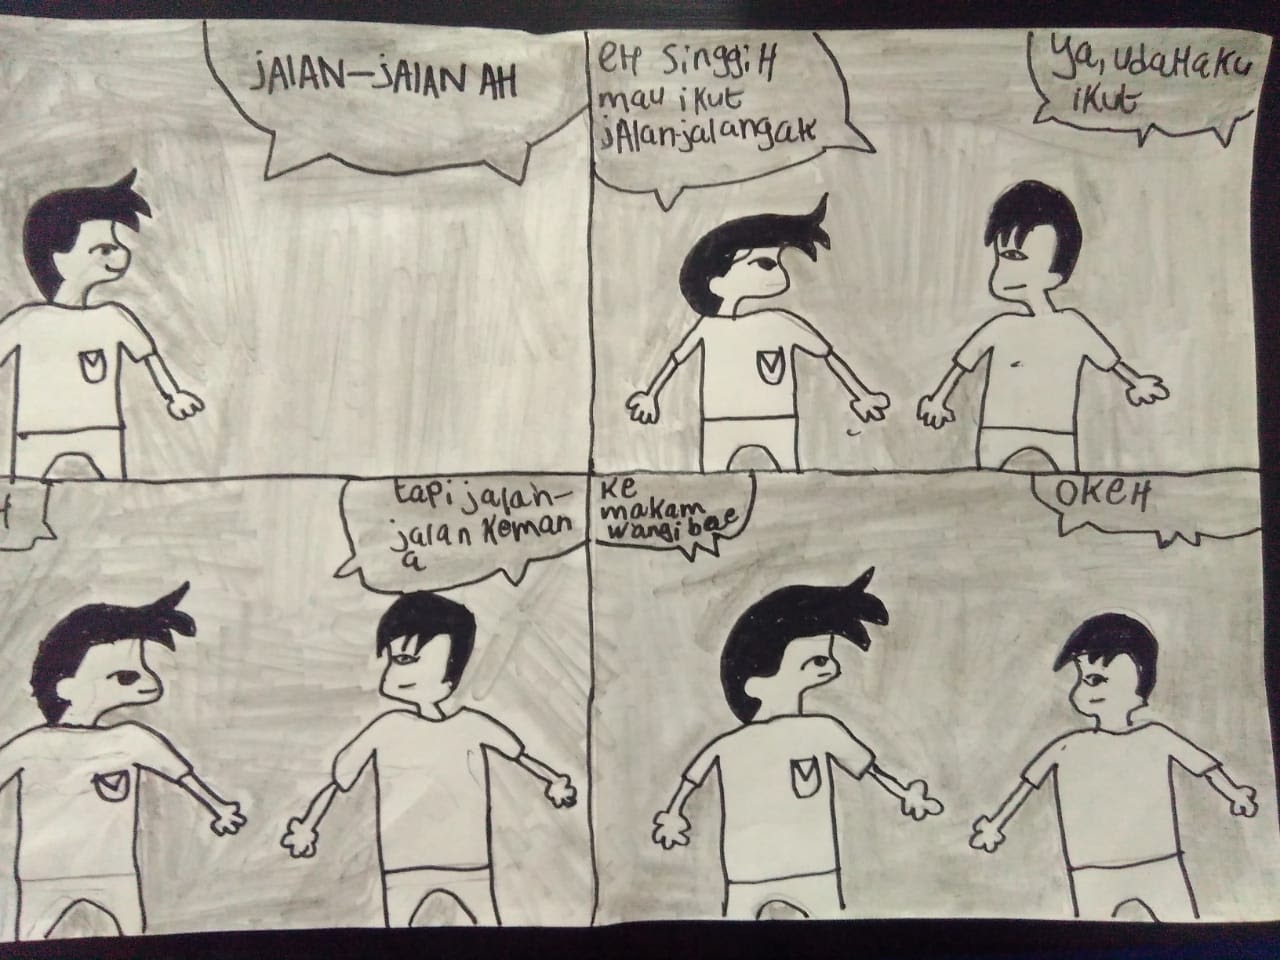 Komik karya anak kelas 5 SD - gurune.net